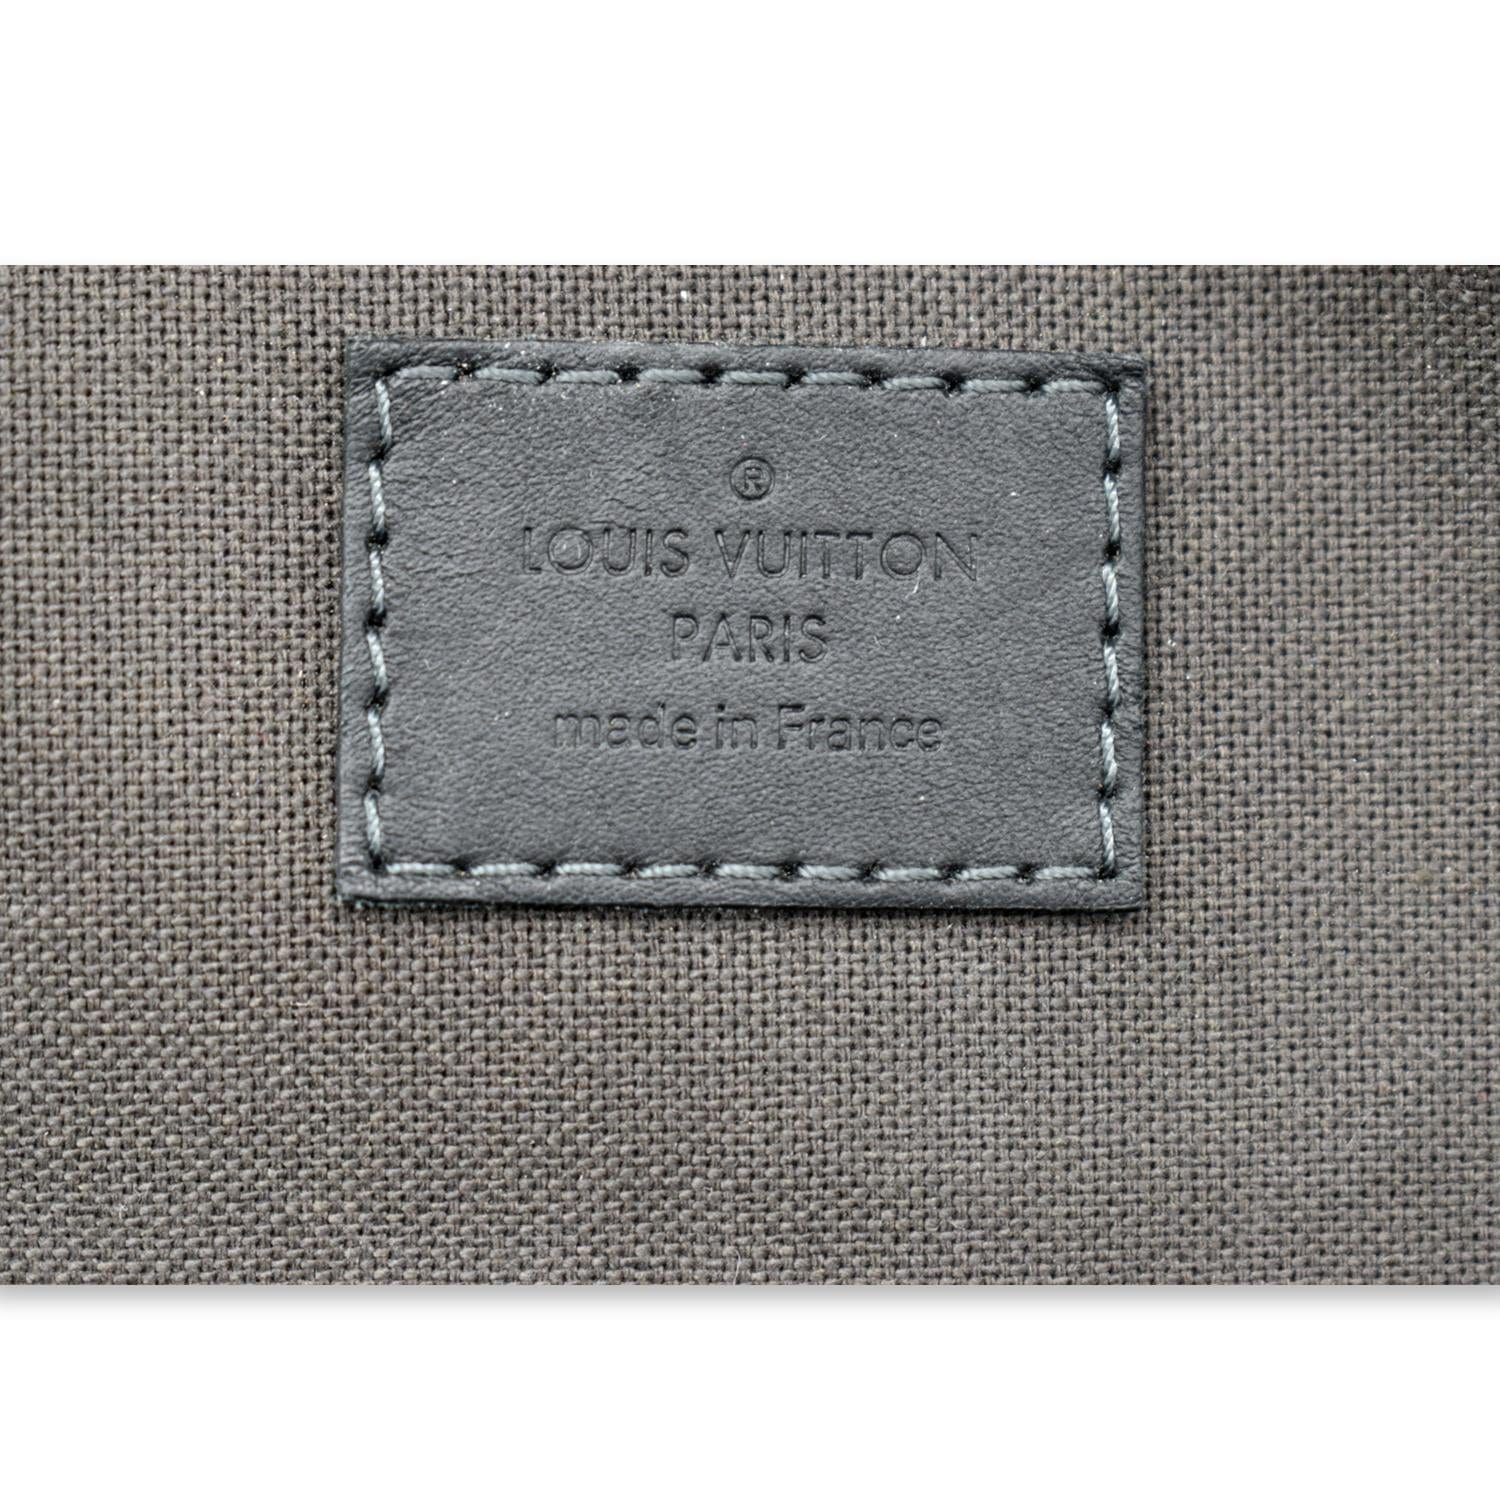 Louis Vuitton Slender Wallet Damier Infini Black in Leather - US